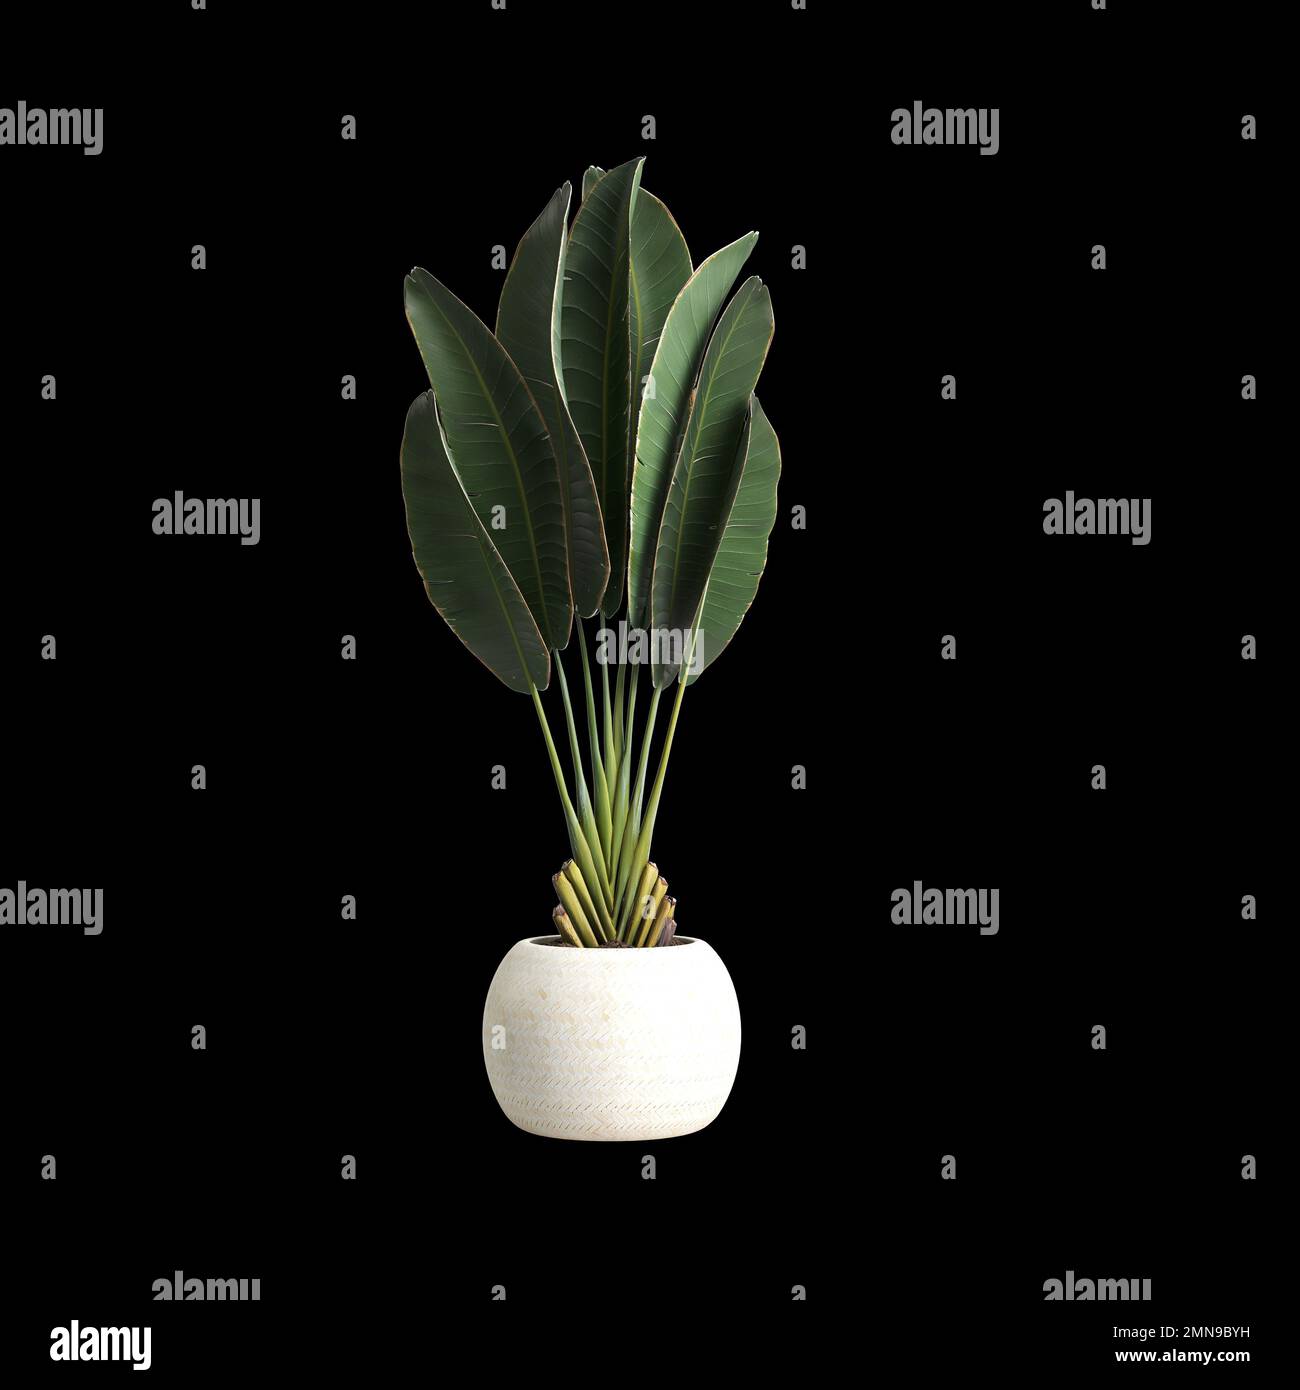 3d illustration of house plant isolated on black background Stock Photo